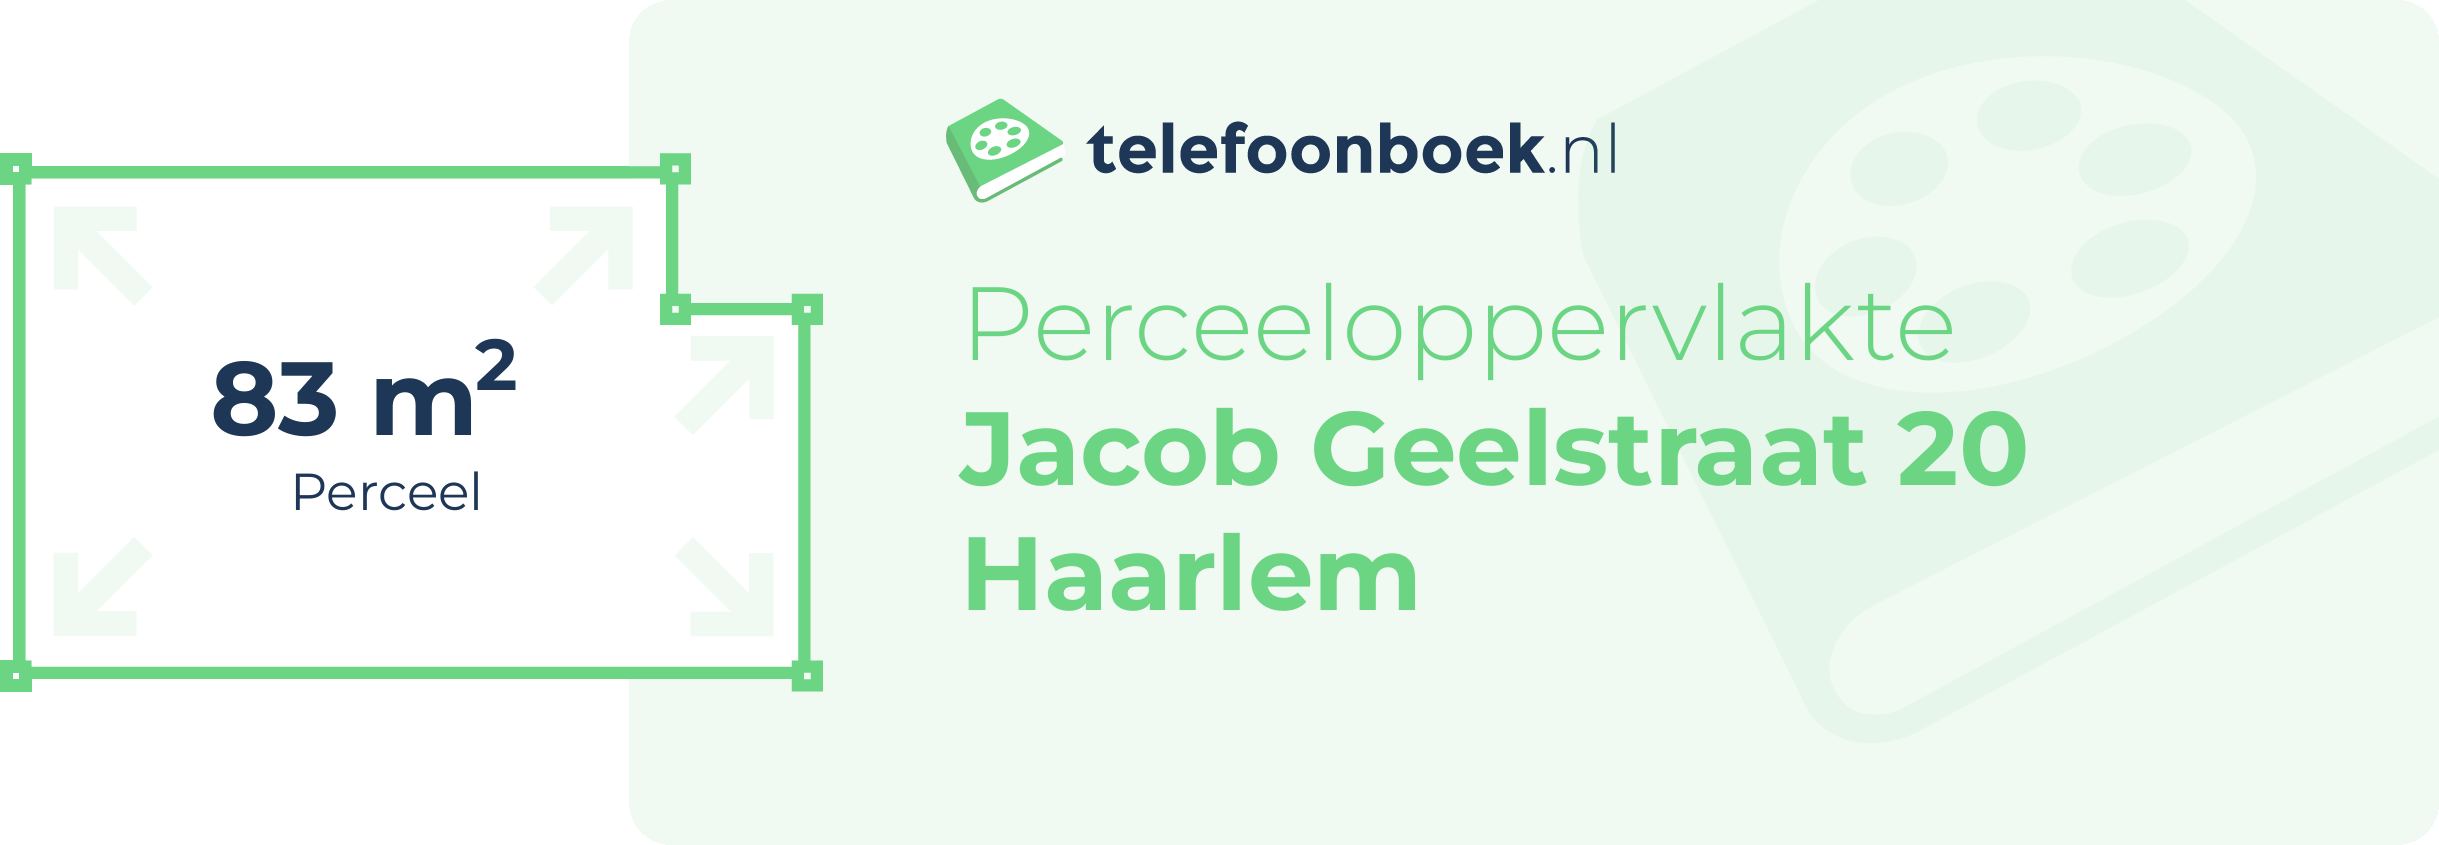 Perceeloppervlakte Jacob Geelstraat 20 Haarlem